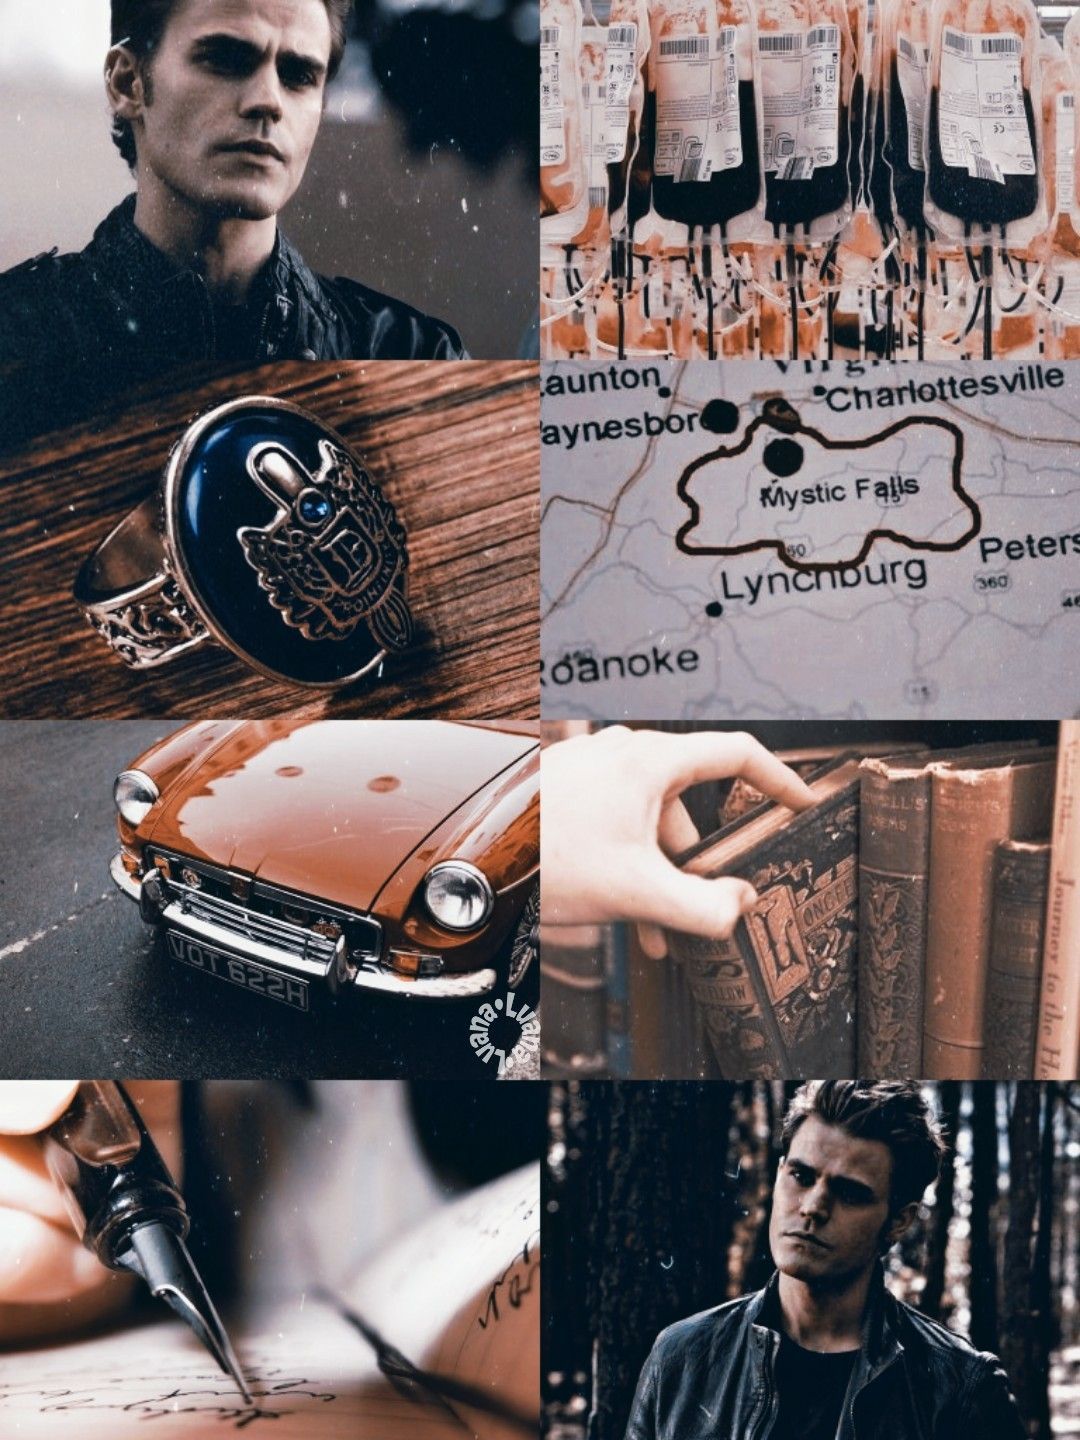 Aesthetic Stefan Salvatore, The Vampire Diaries. Paul wesley vampire diaries, Vampire diaries wallpaper, Stefan salvatore